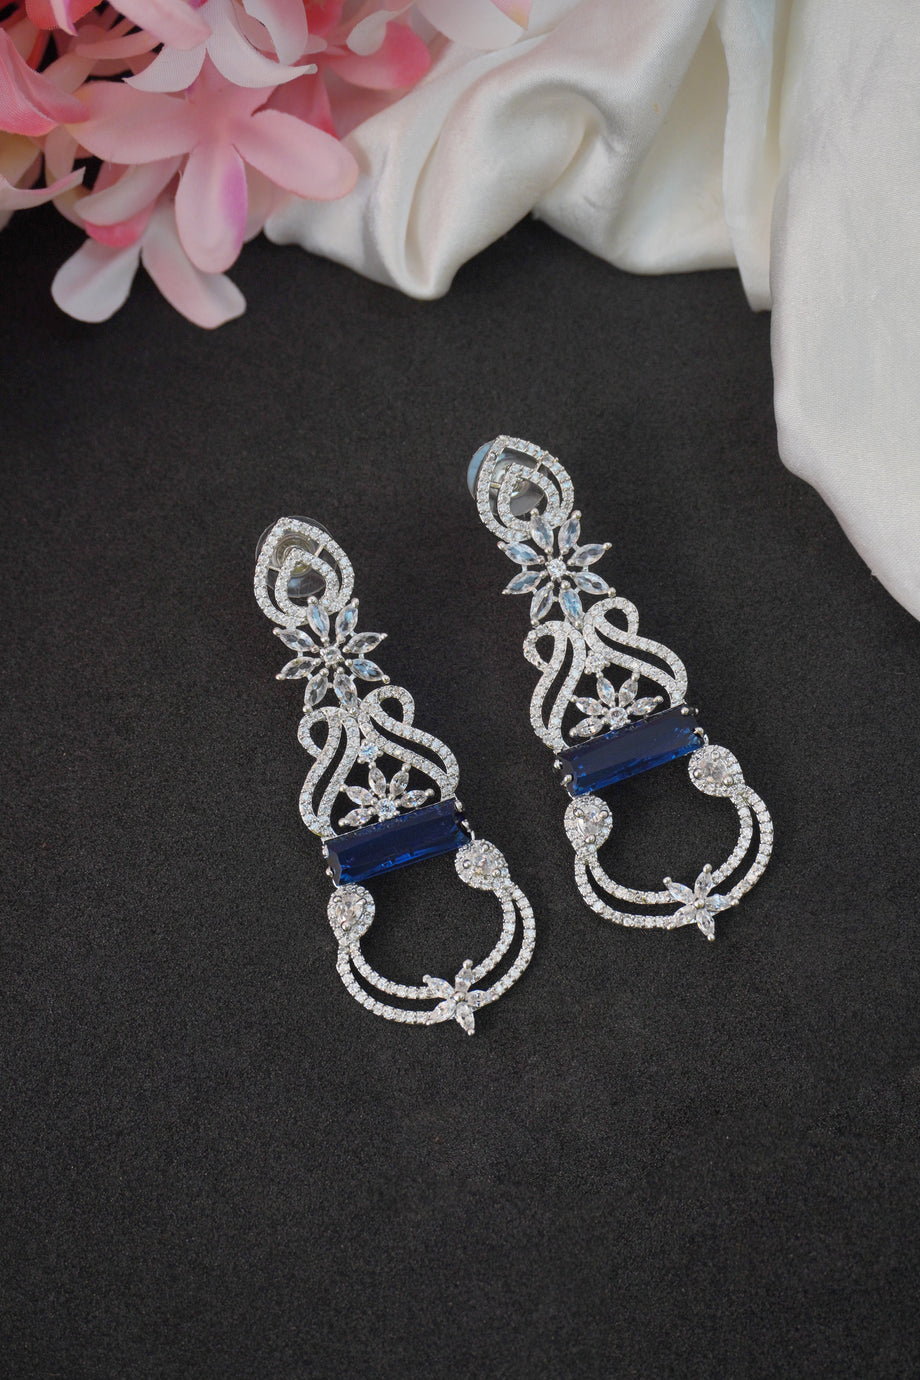 Details more than 120 sapphire earrings pandora best